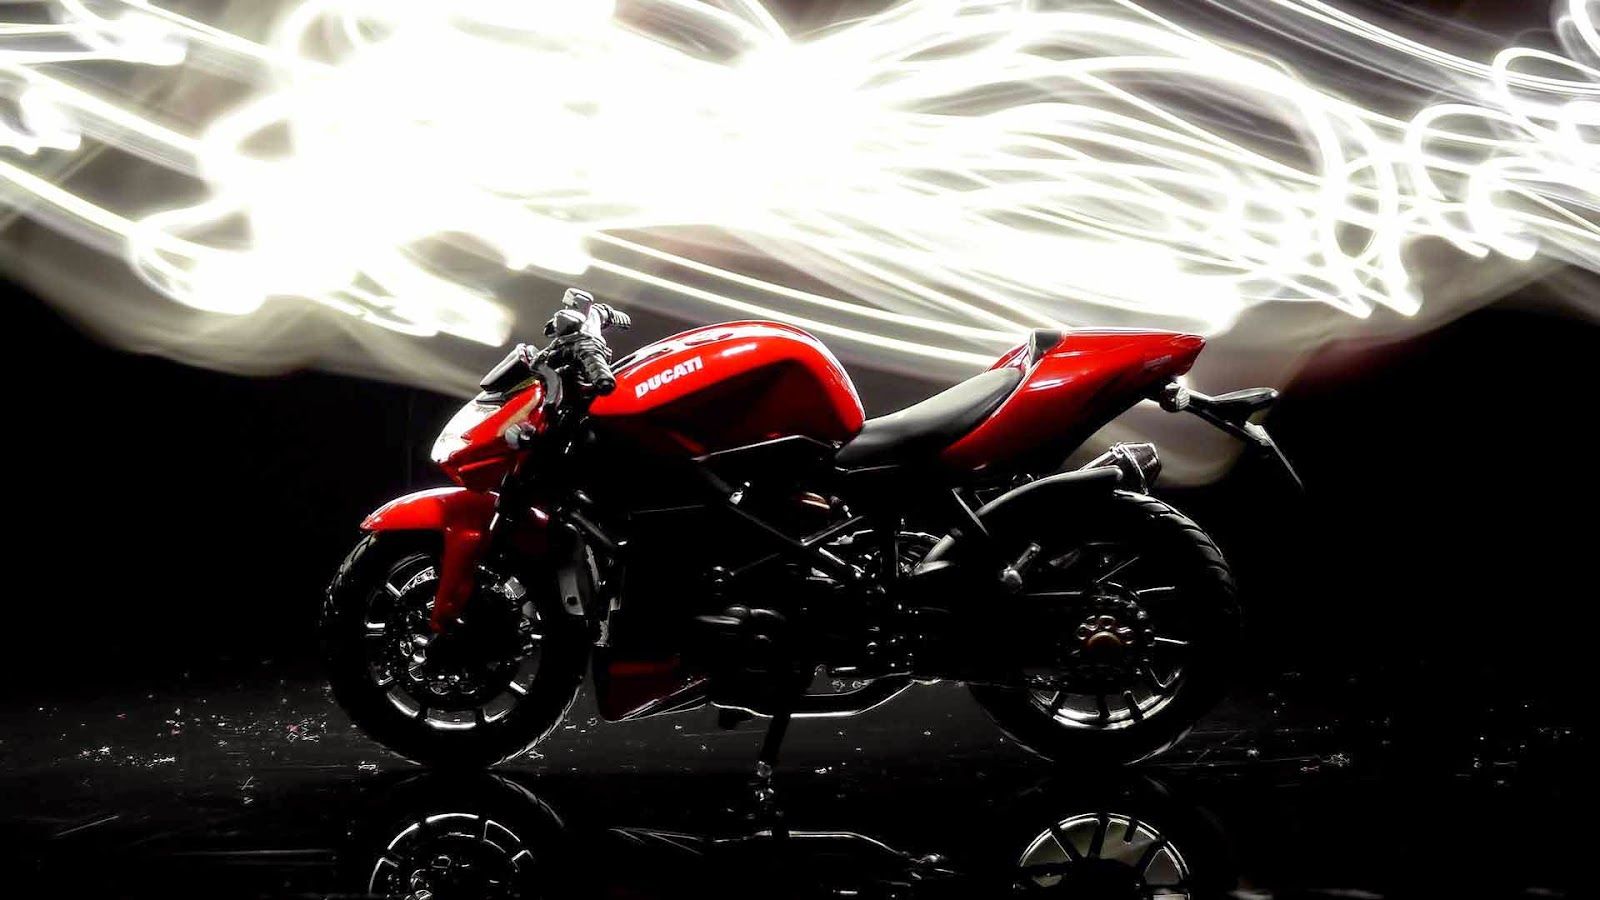 HD Wallpapers: Ducati Bikes Wallpapers